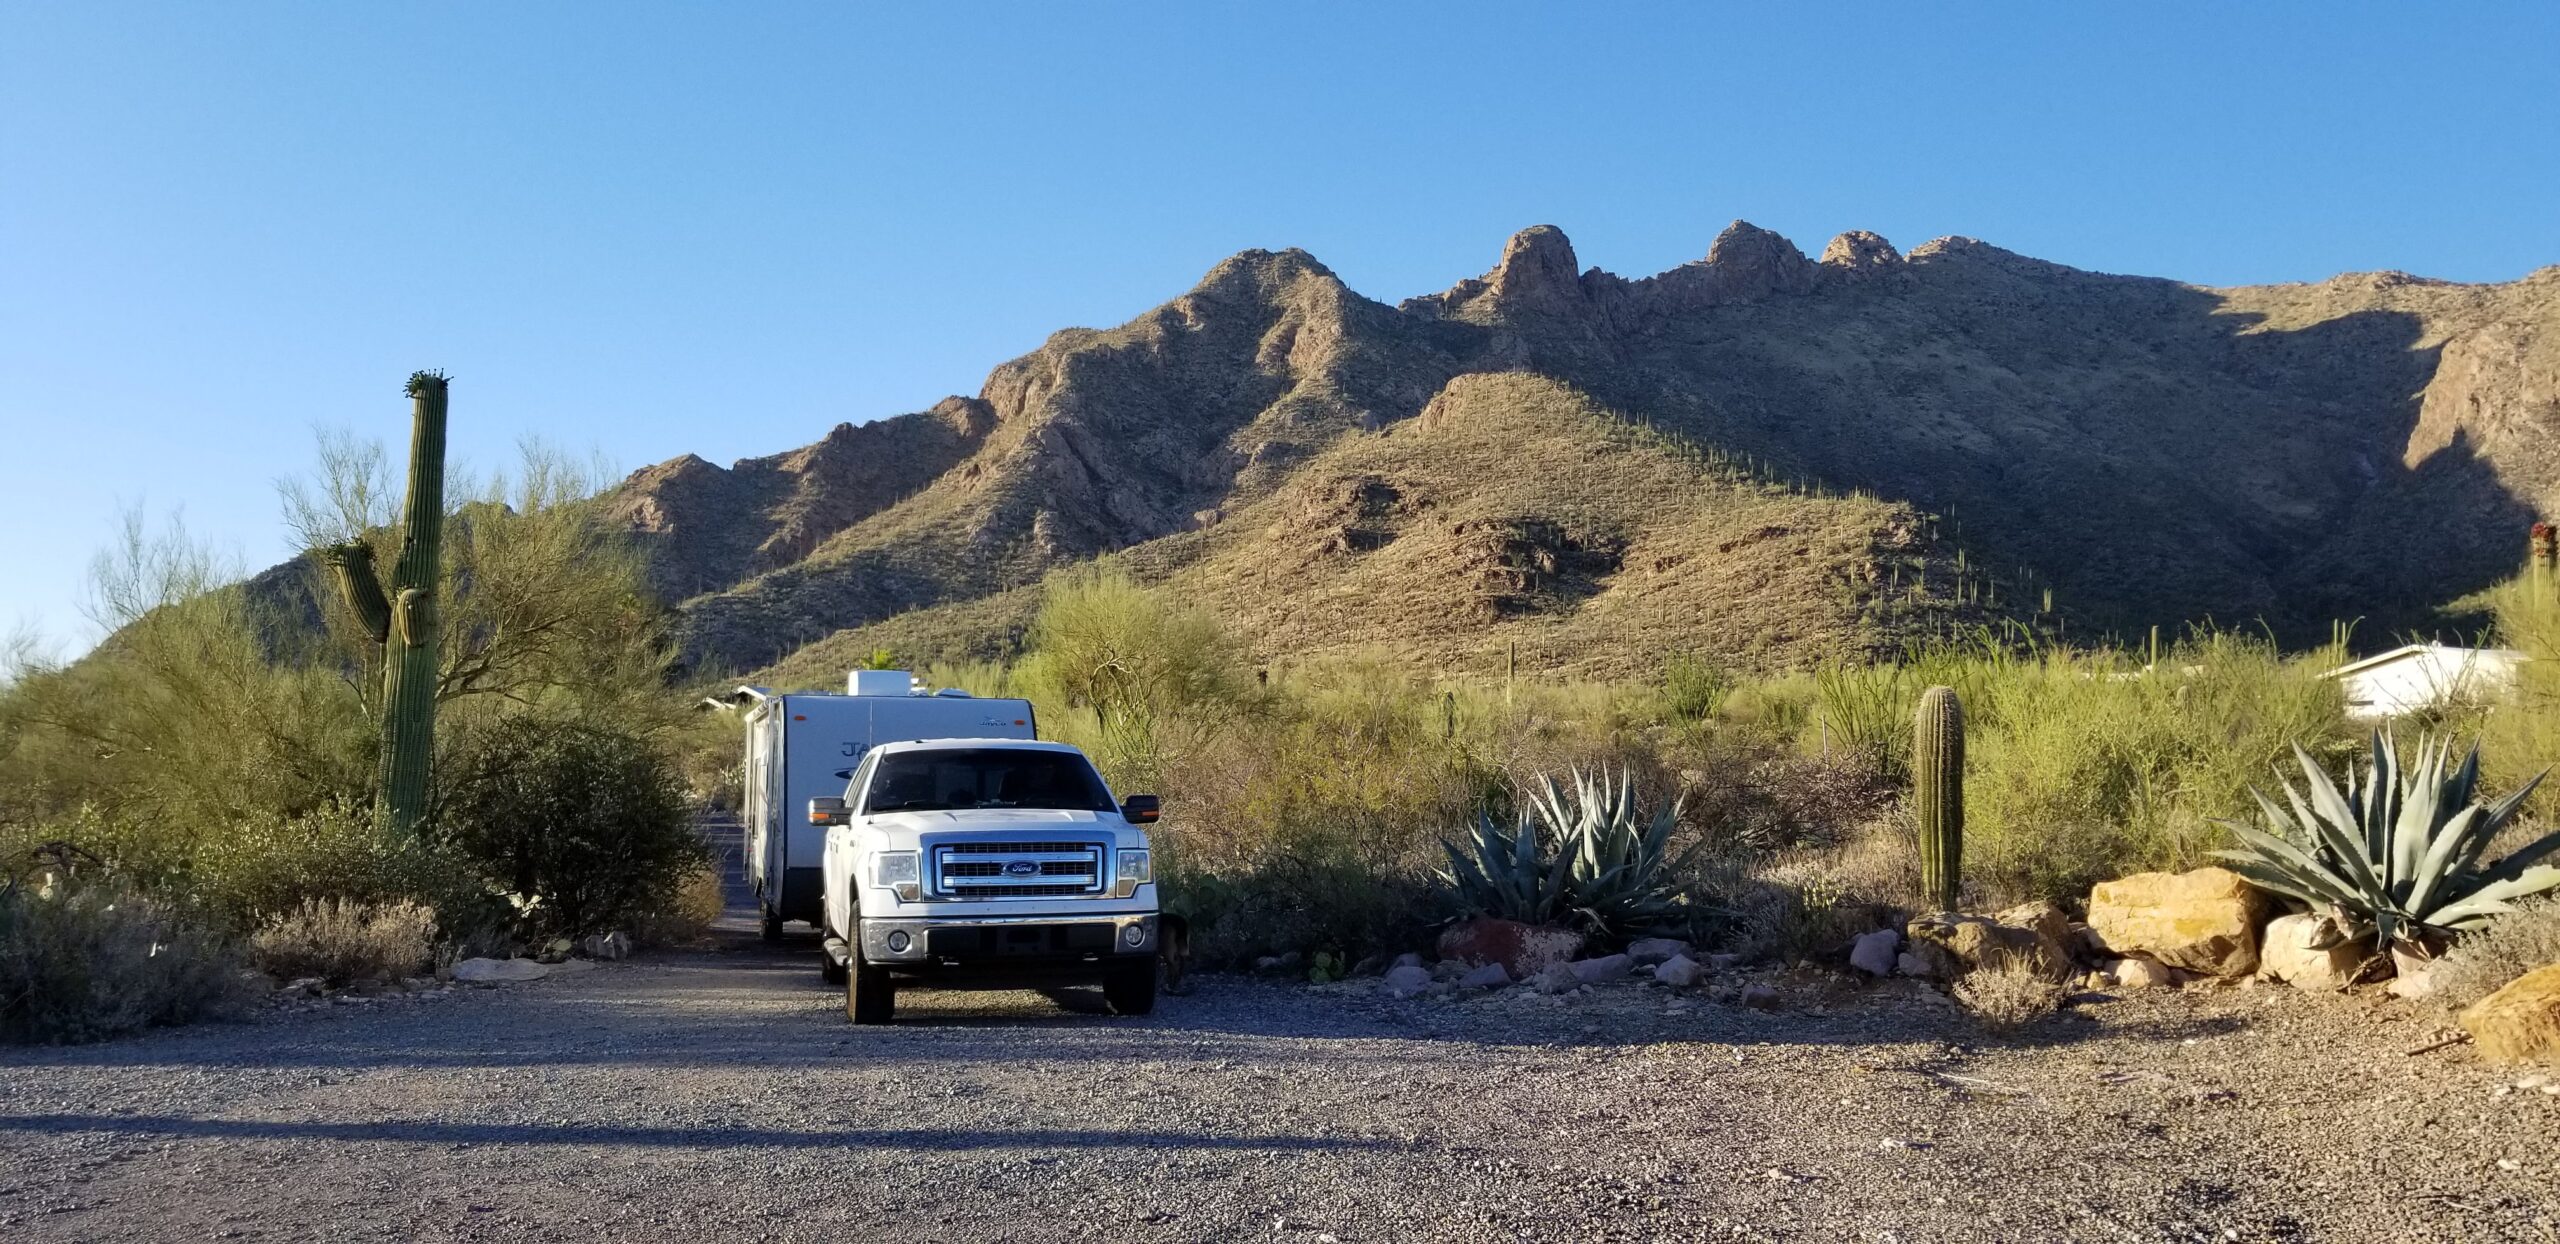 NMC076th_Fulltime_Traveling_Arizona